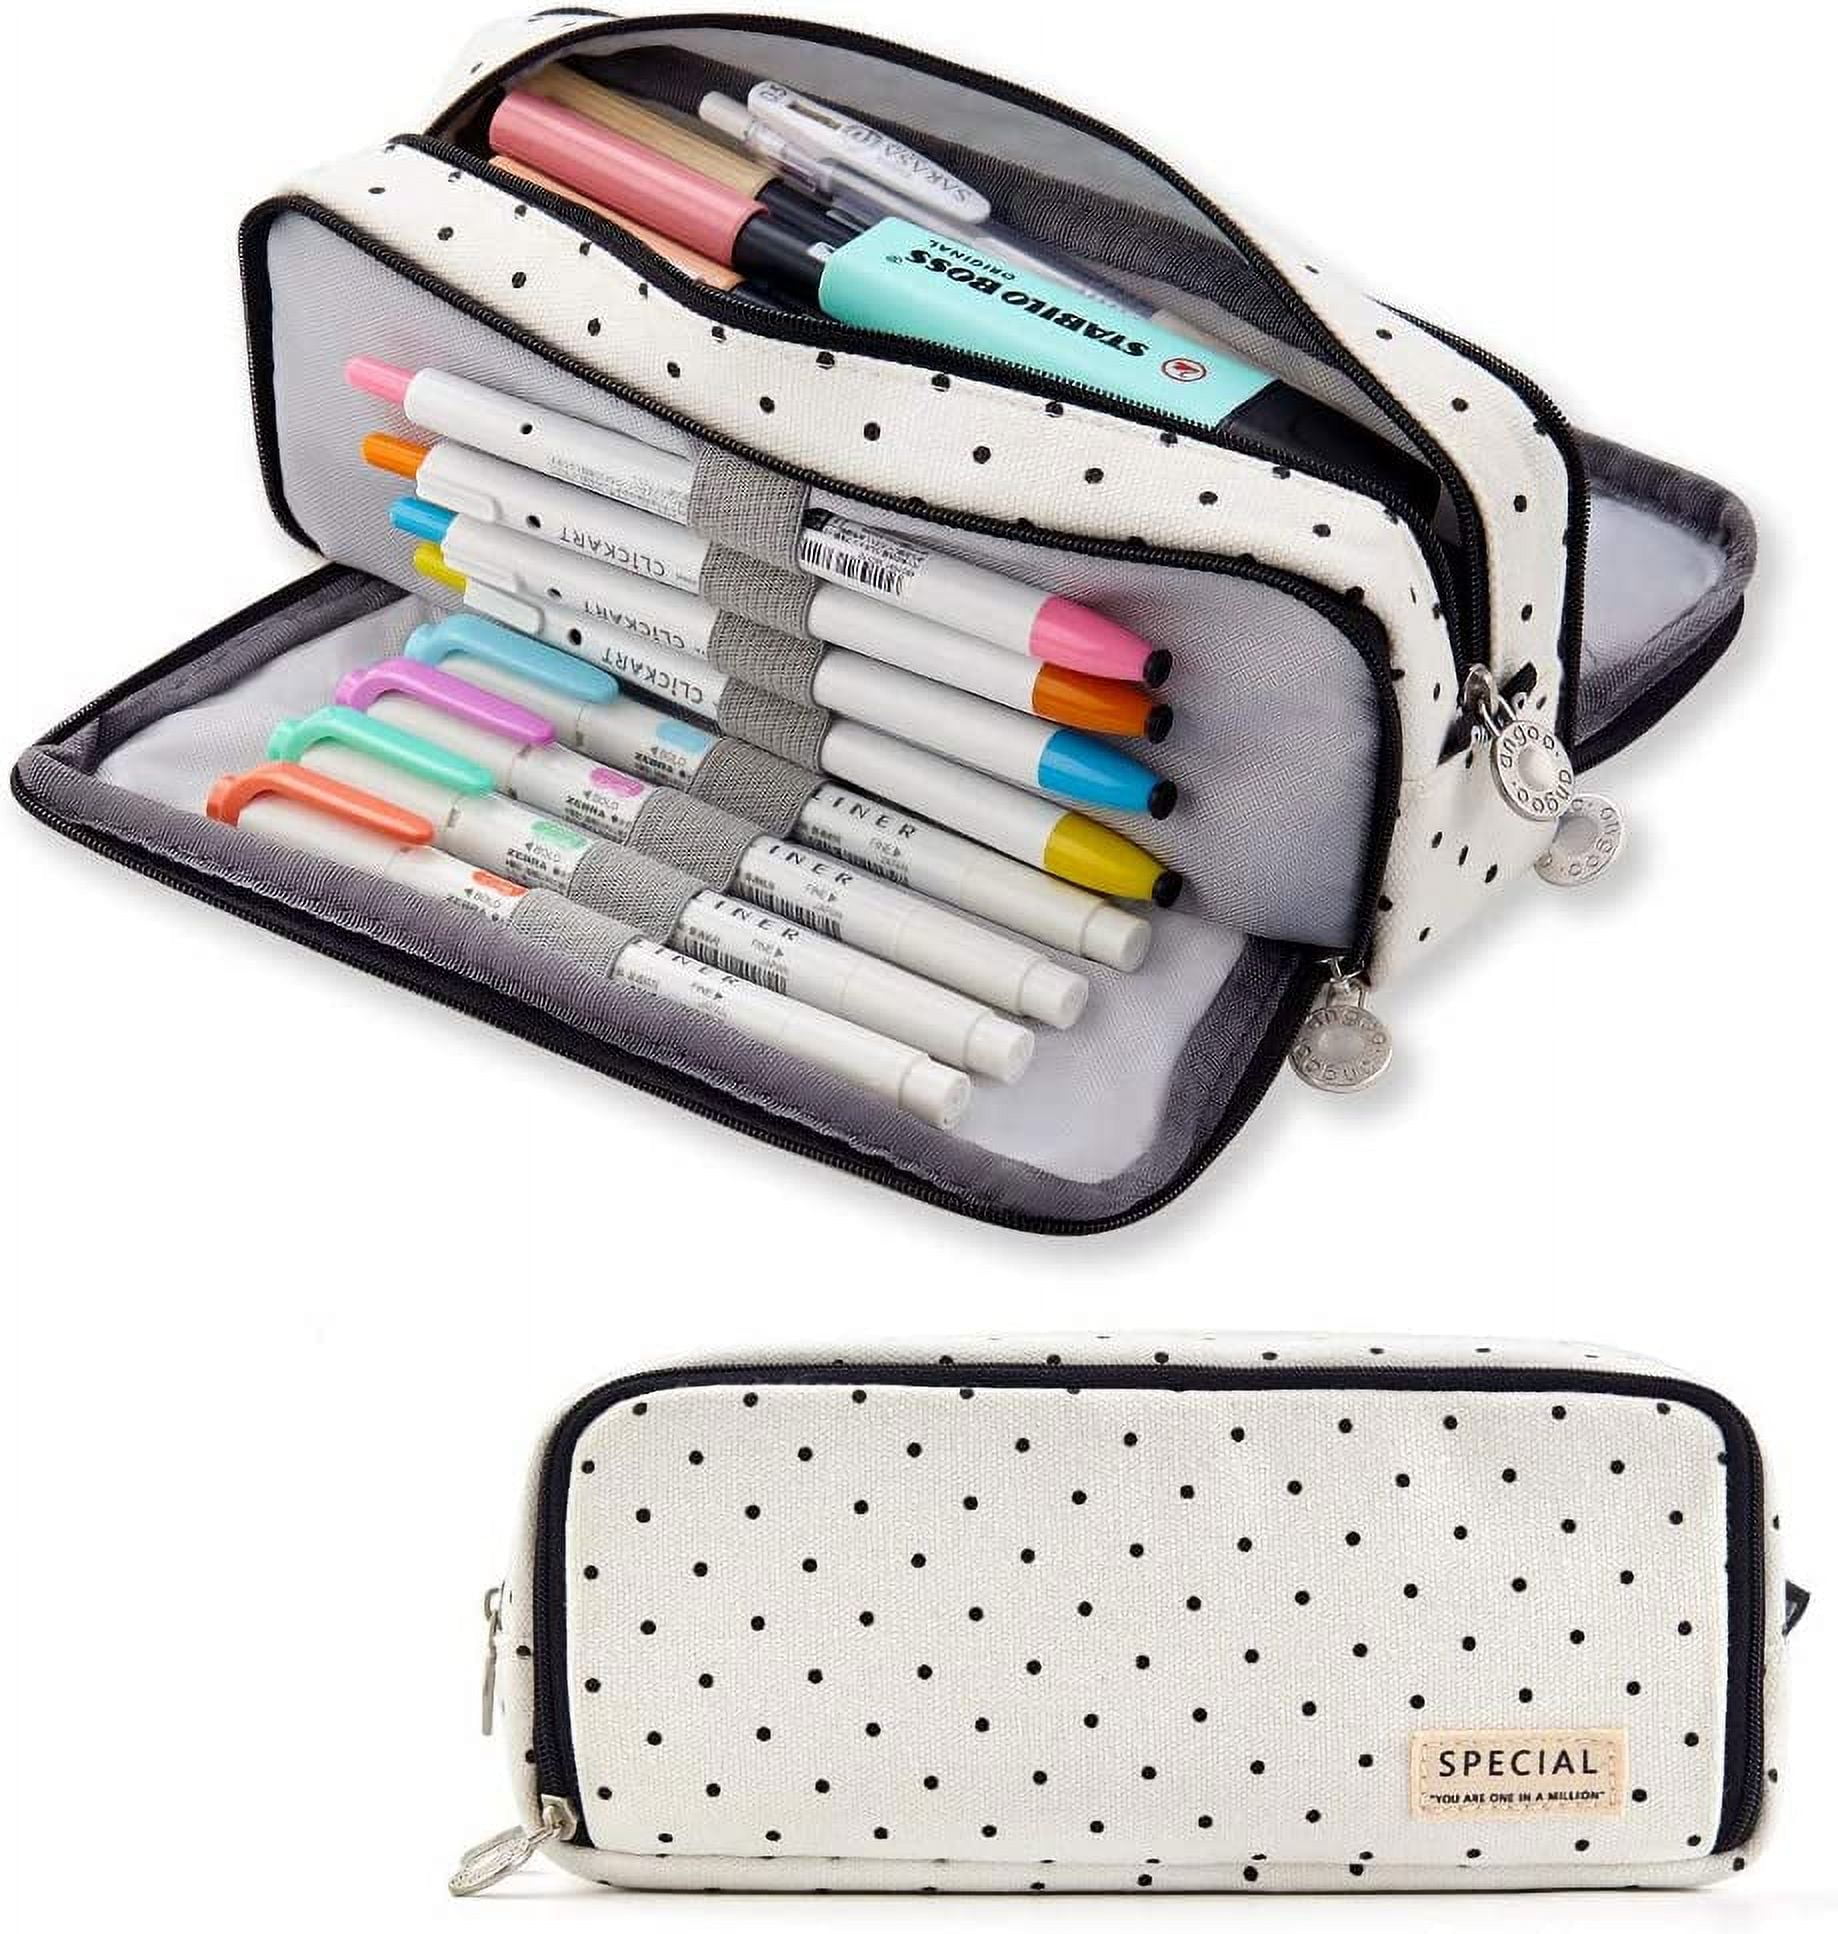 Cute Pencil Bag Large Capacity Pencil Case Aesthetic Pencil Pouch